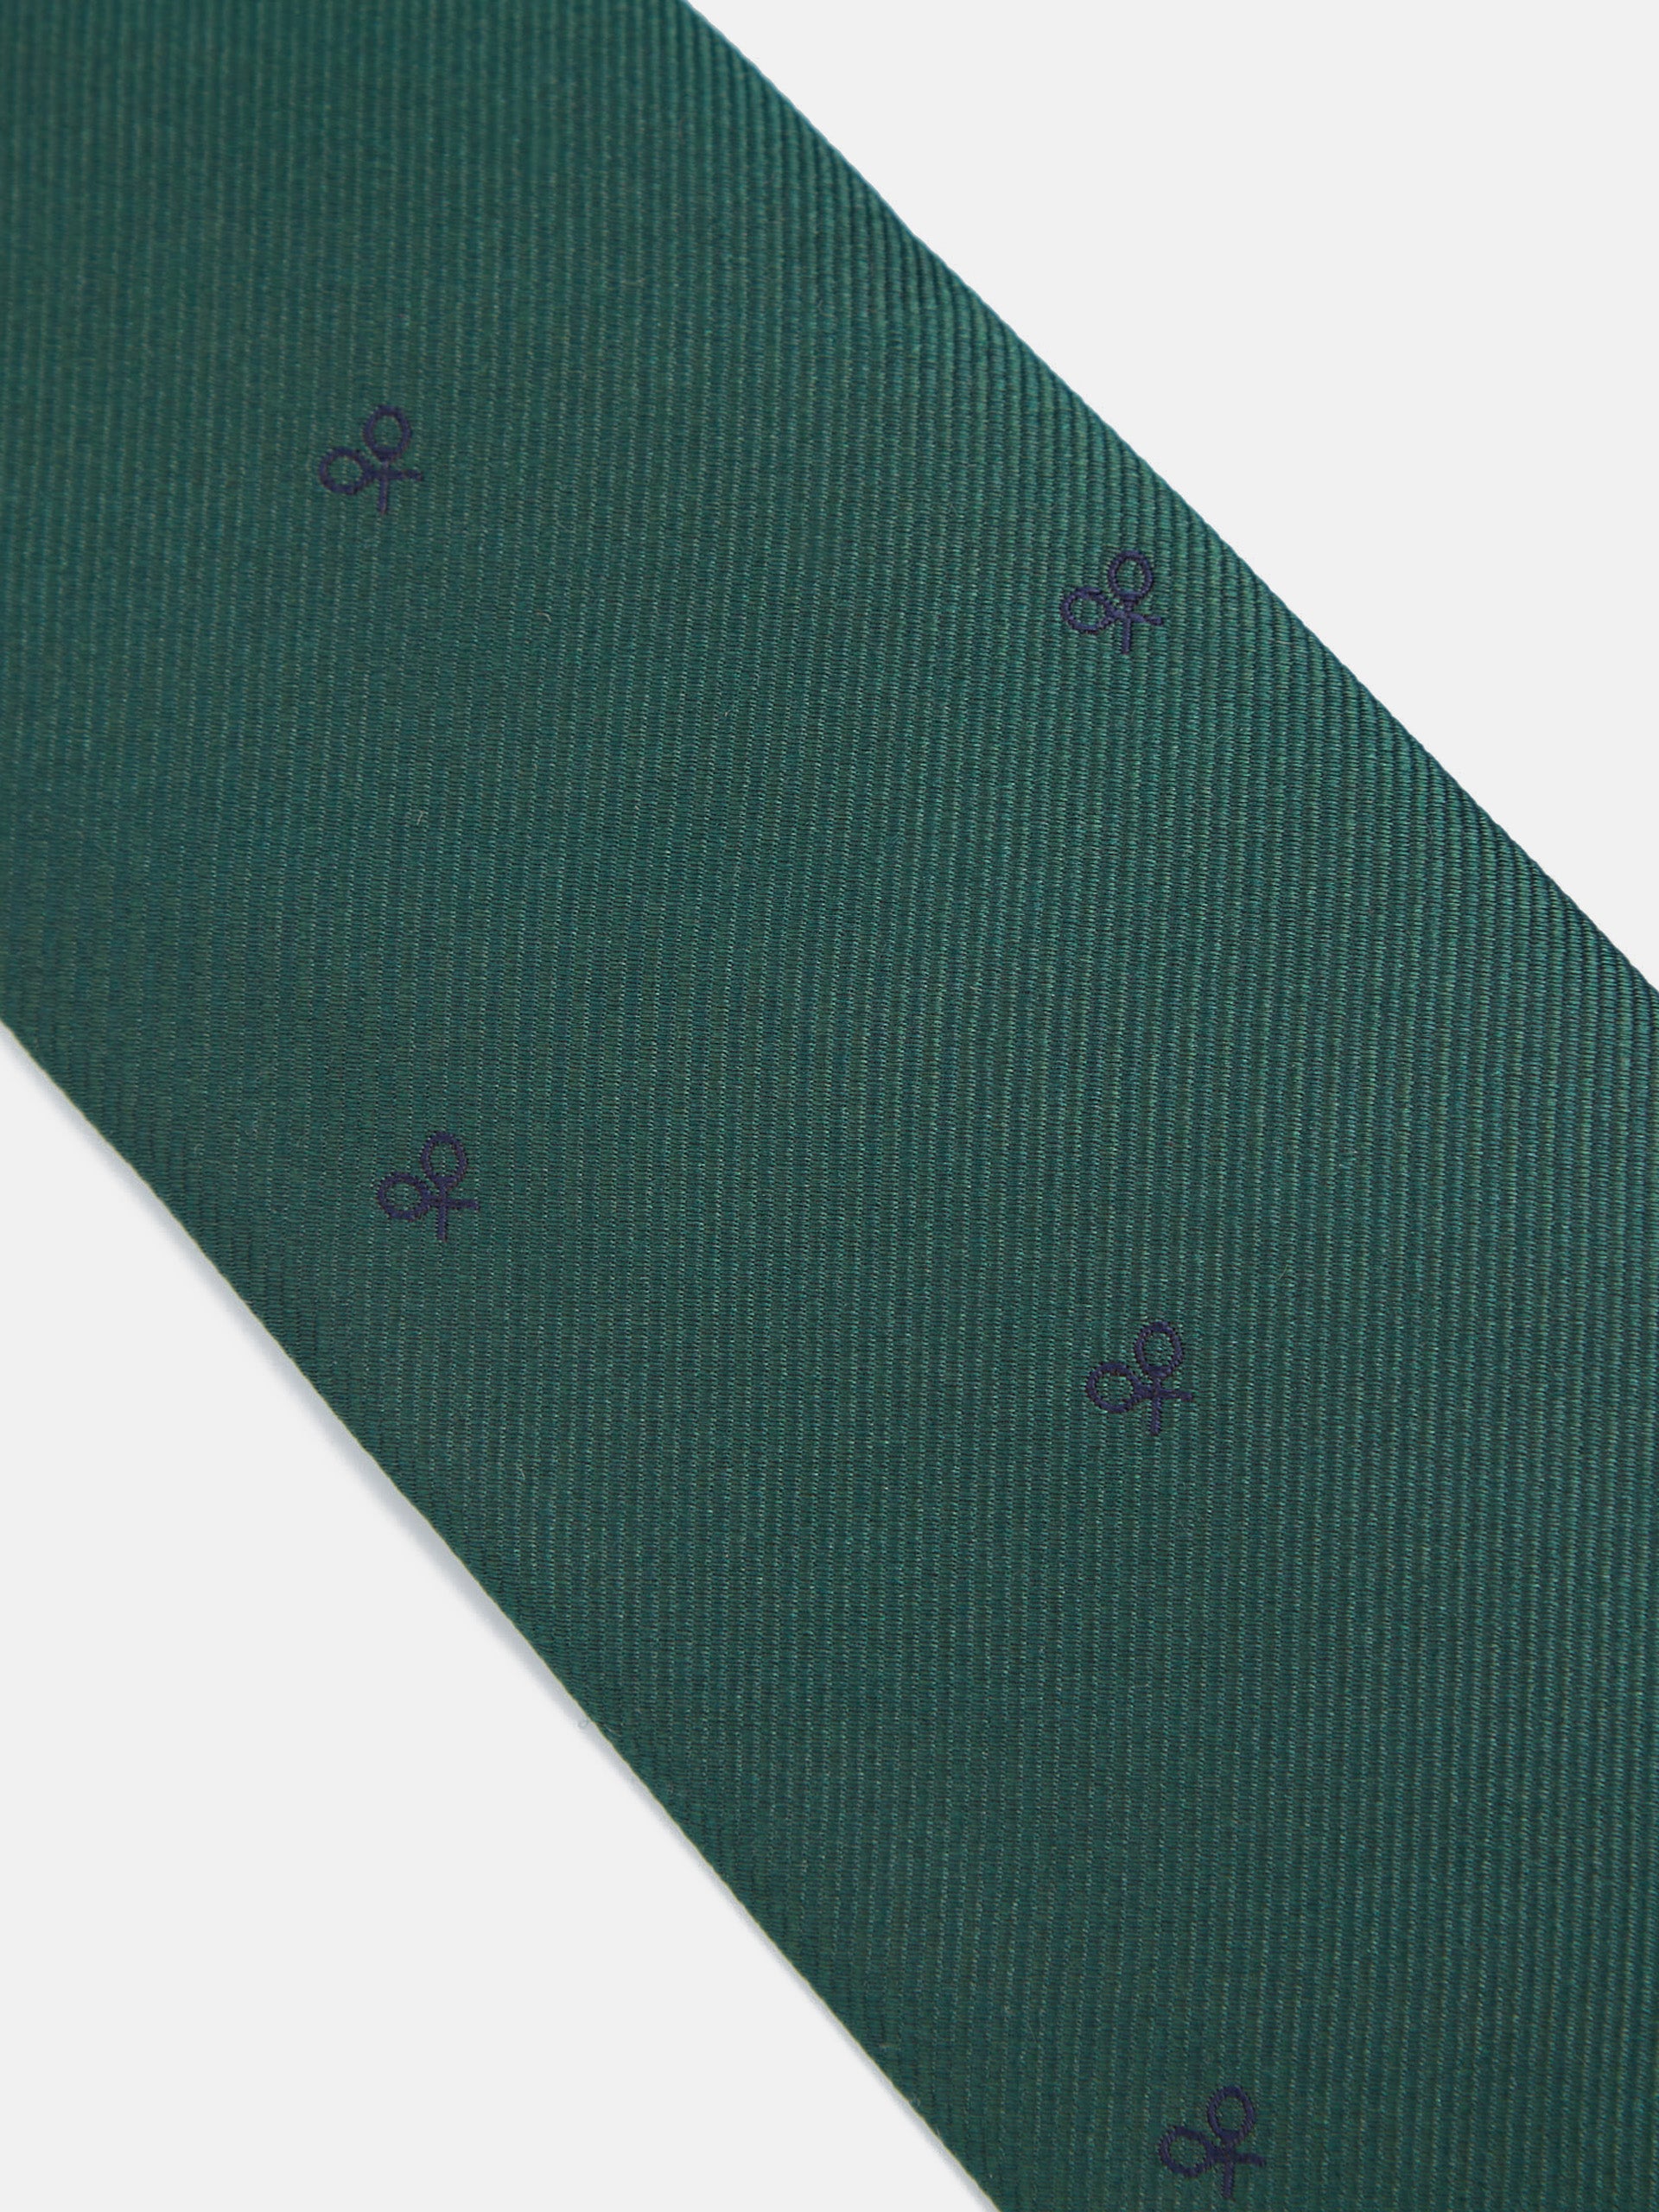 Silbon tie with green racket motifs